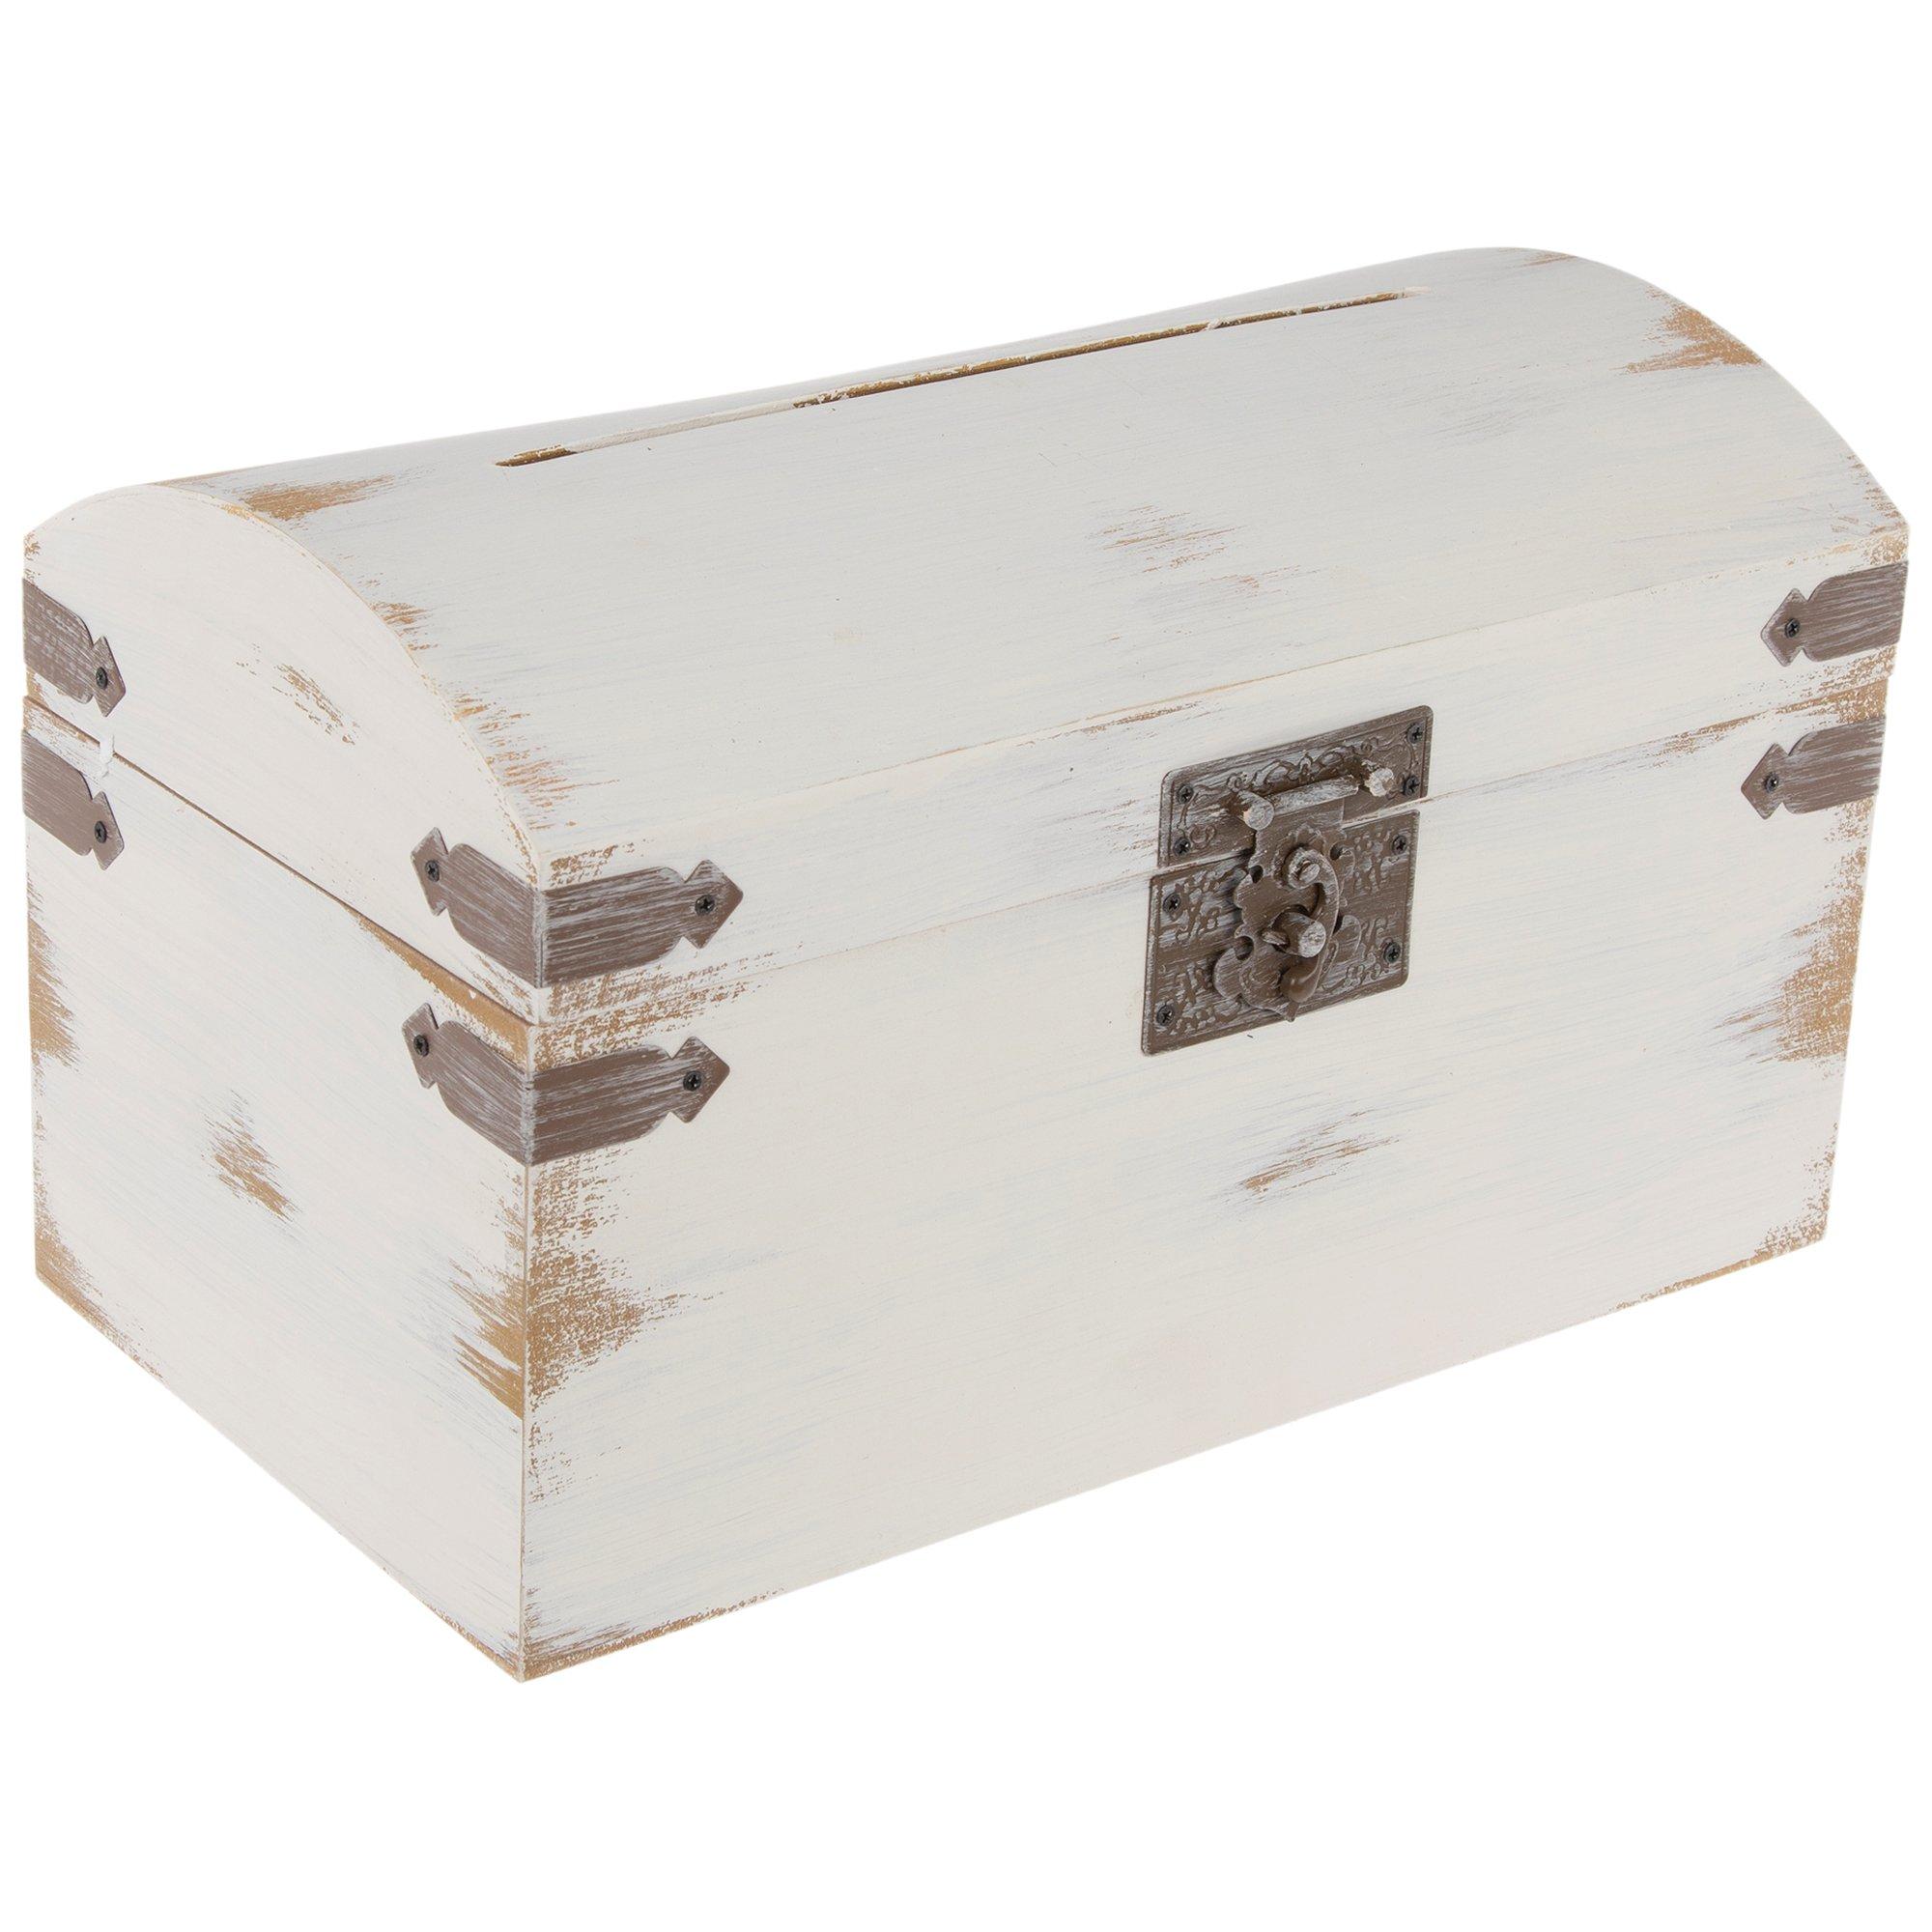 Wedding Card Box With Slot Option Engraved Wood Card Box 